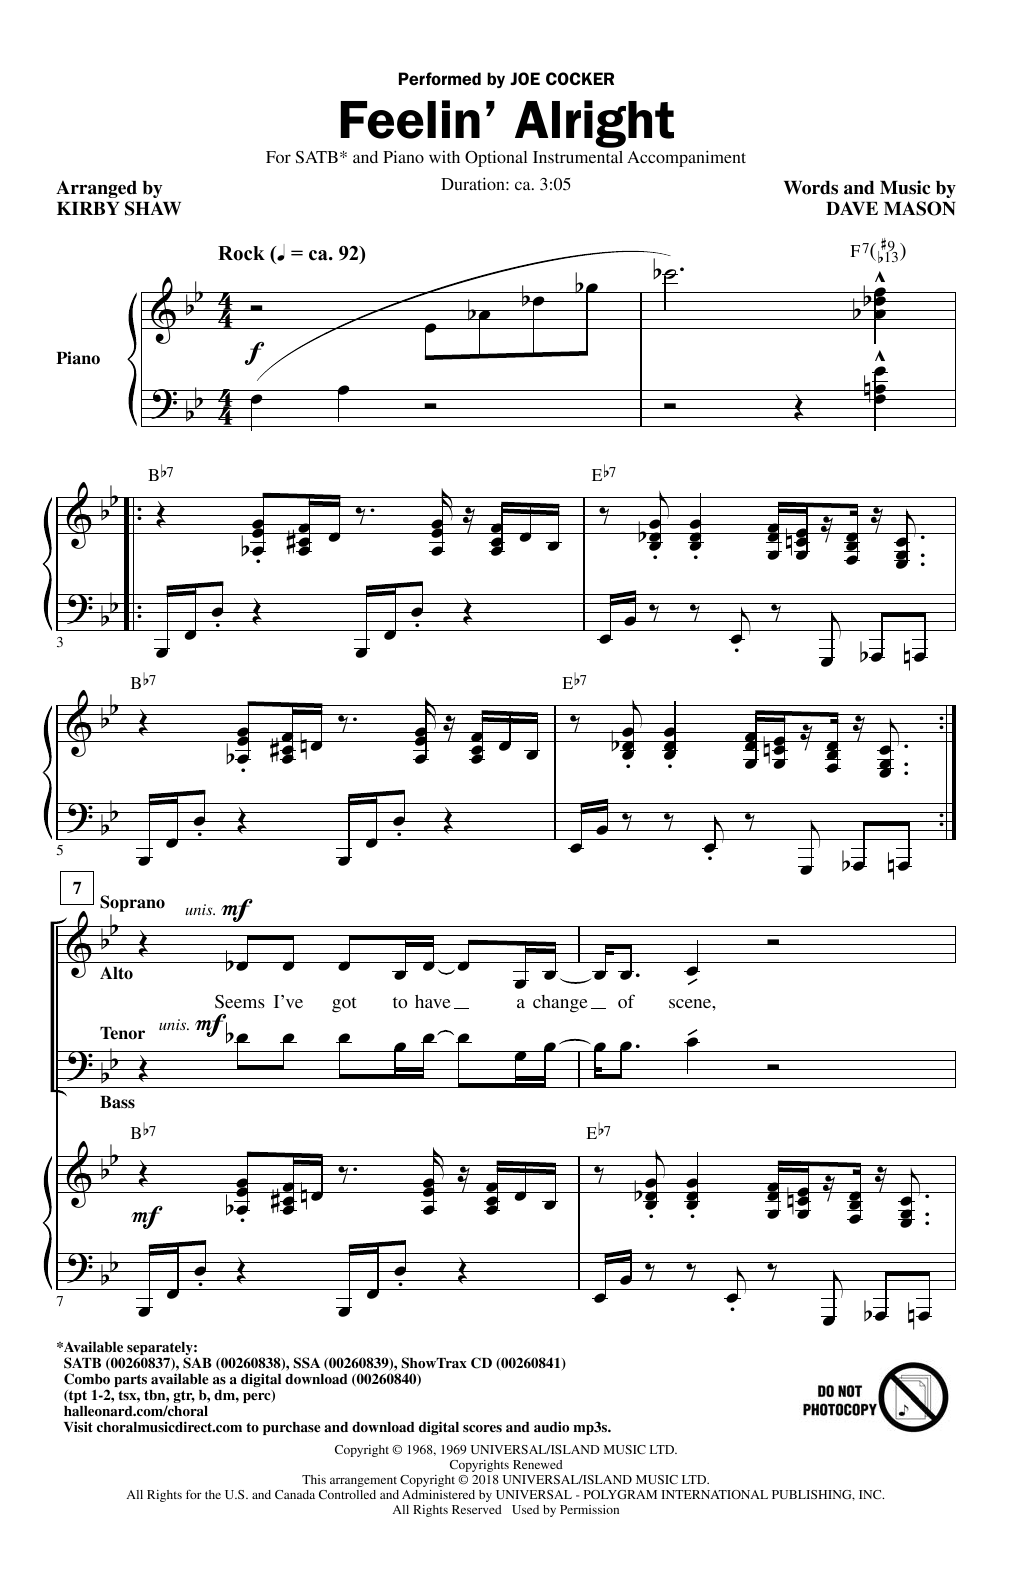 Joe Cocker Feelin' Alright (arr. Kirby Shaw) Sheet Music Notes & Chords for SATB - Download or Print PDF